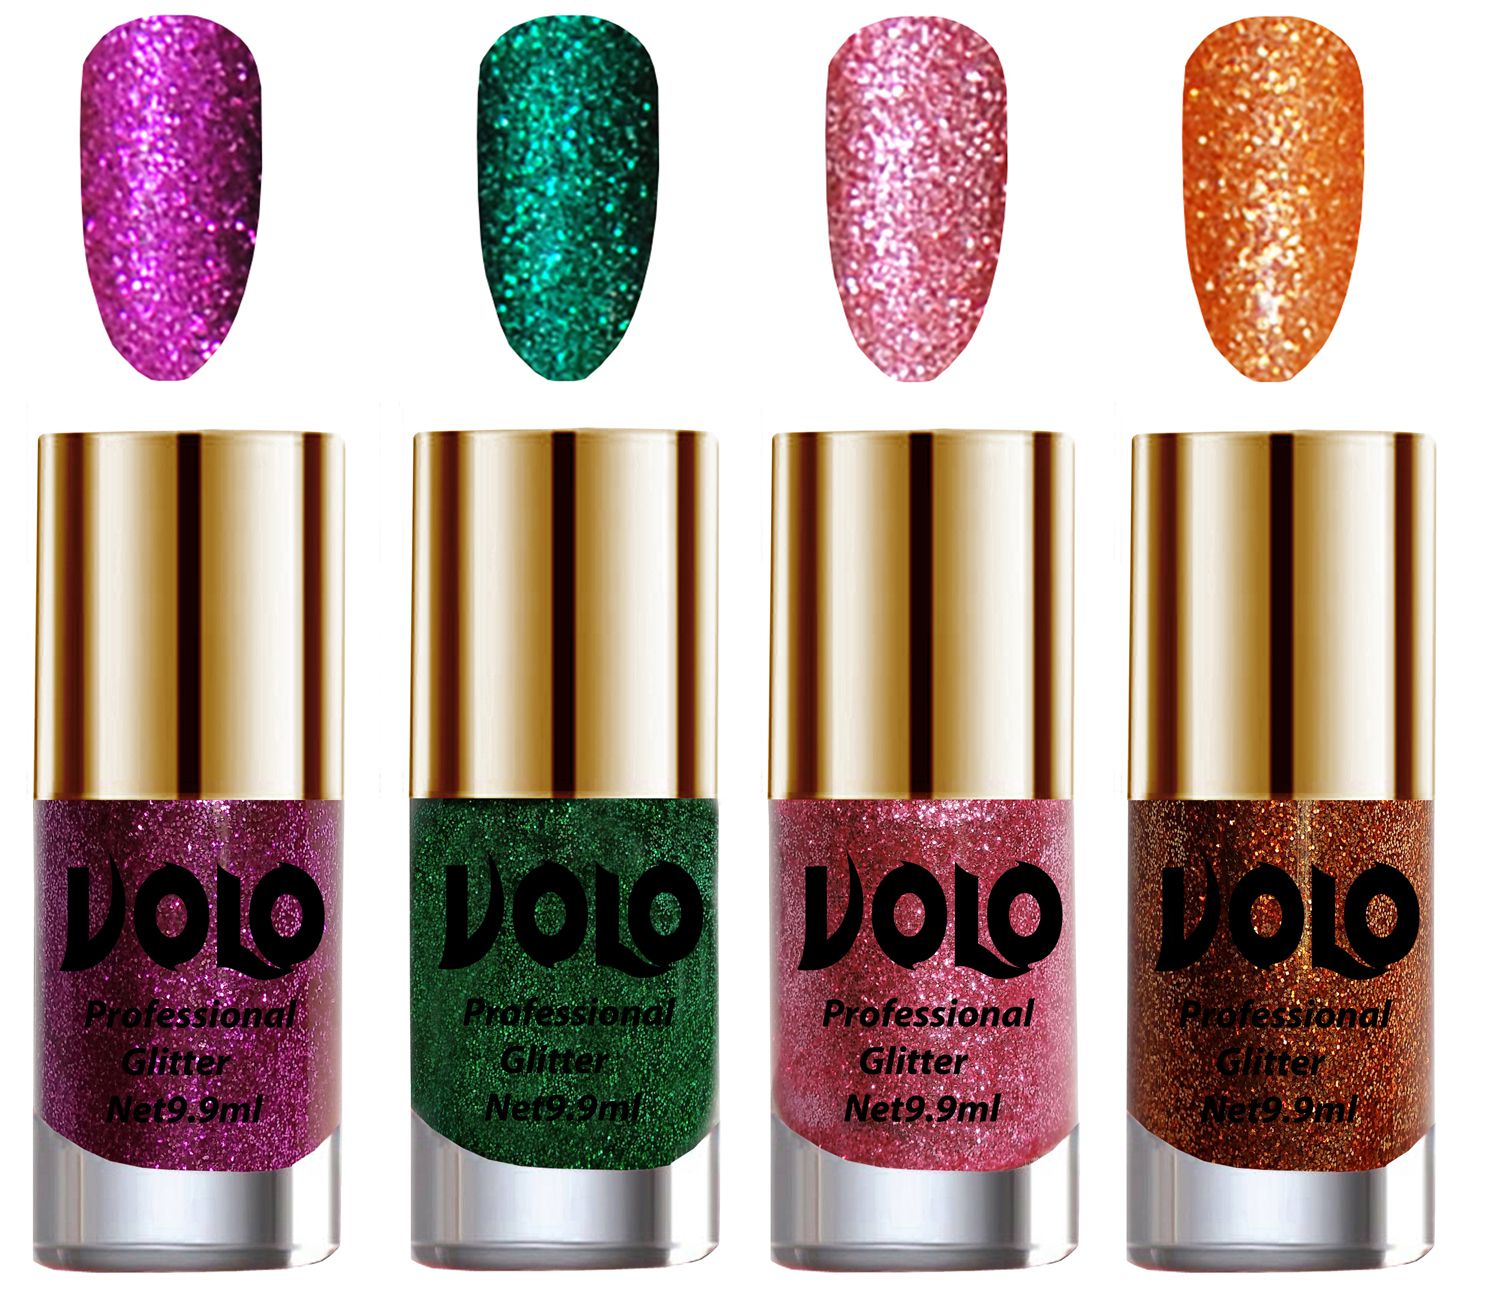     			VOLO Professionally Used Glitter Shine Nail Polish Purple,Green,Pink Orange Pack of 4 39 mL